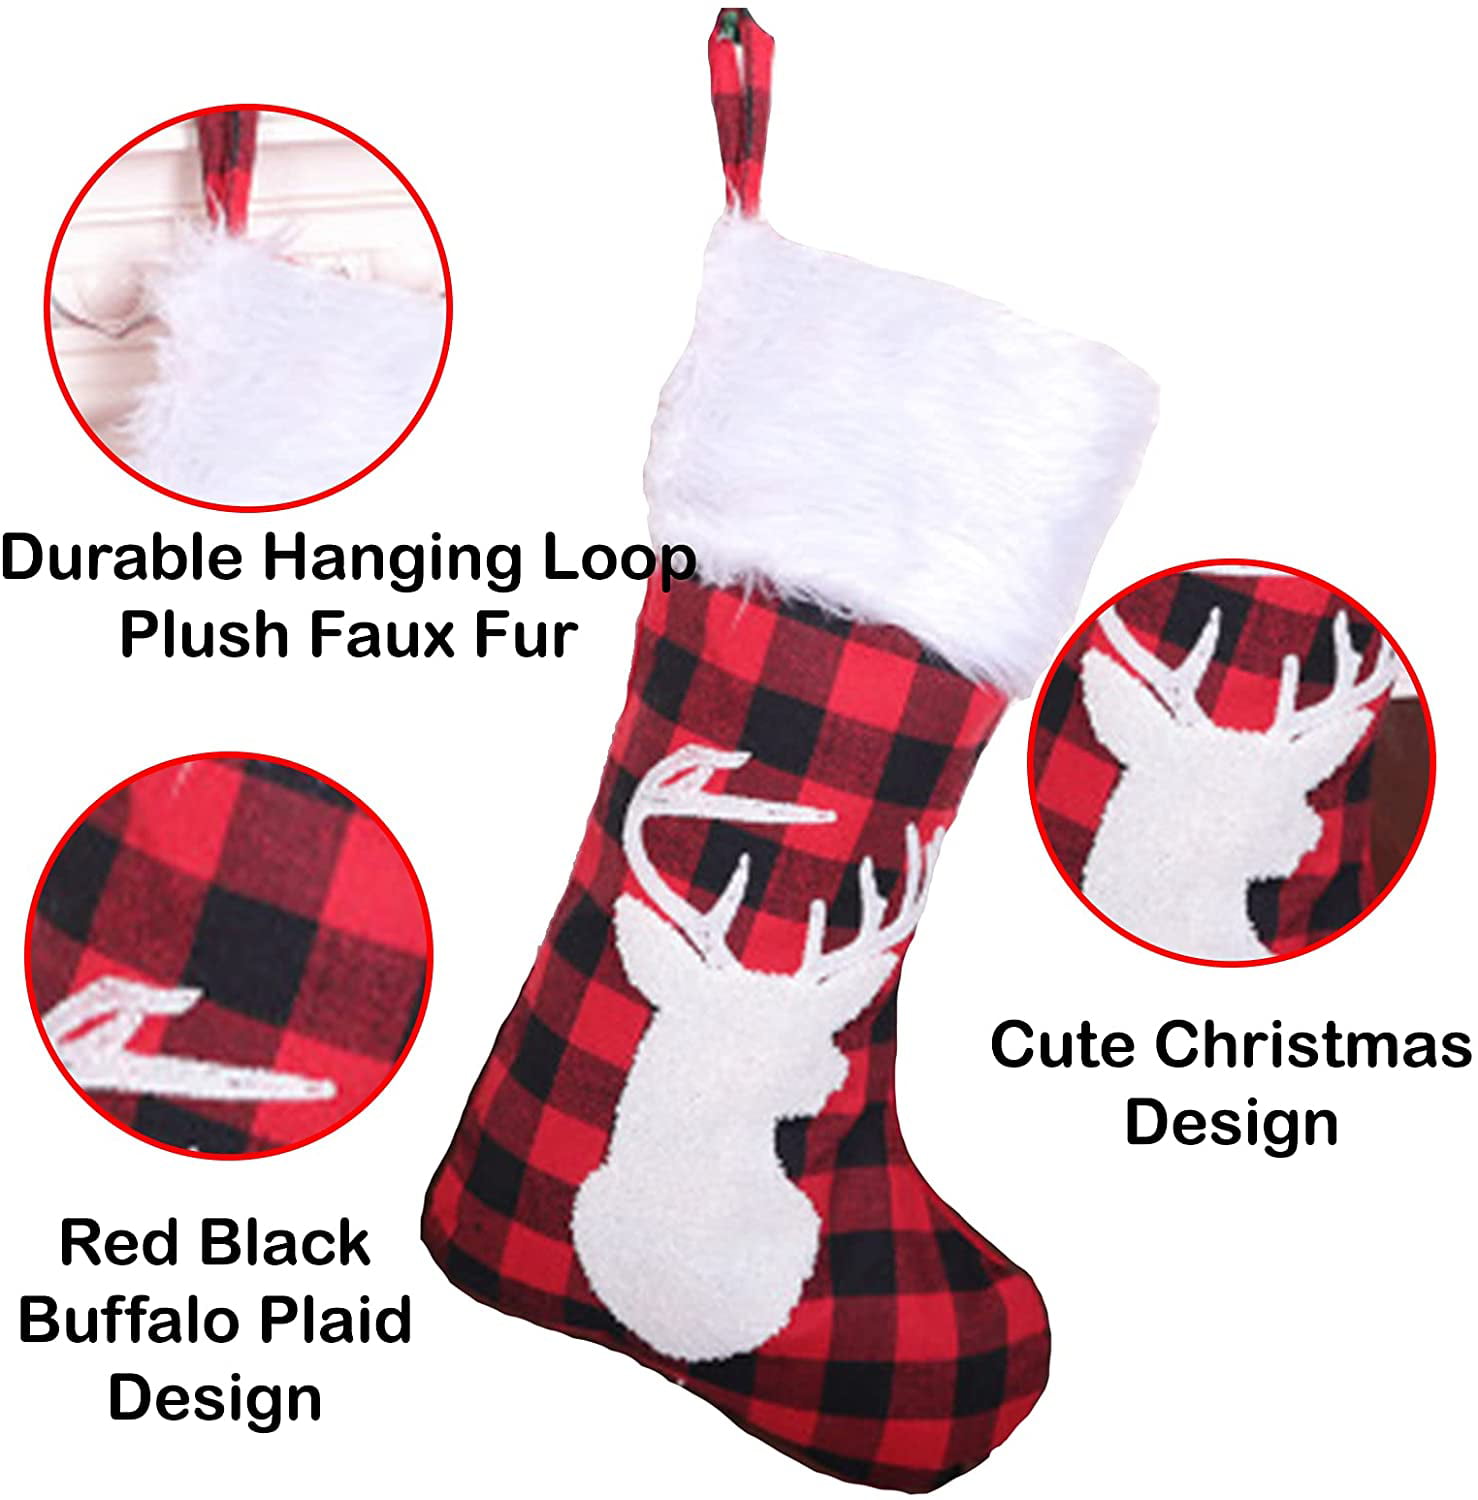 Details about   4 Pcs Xmas Stockings Red Black Buffalo Plaid Fireplace Hanging Stockings Decor 